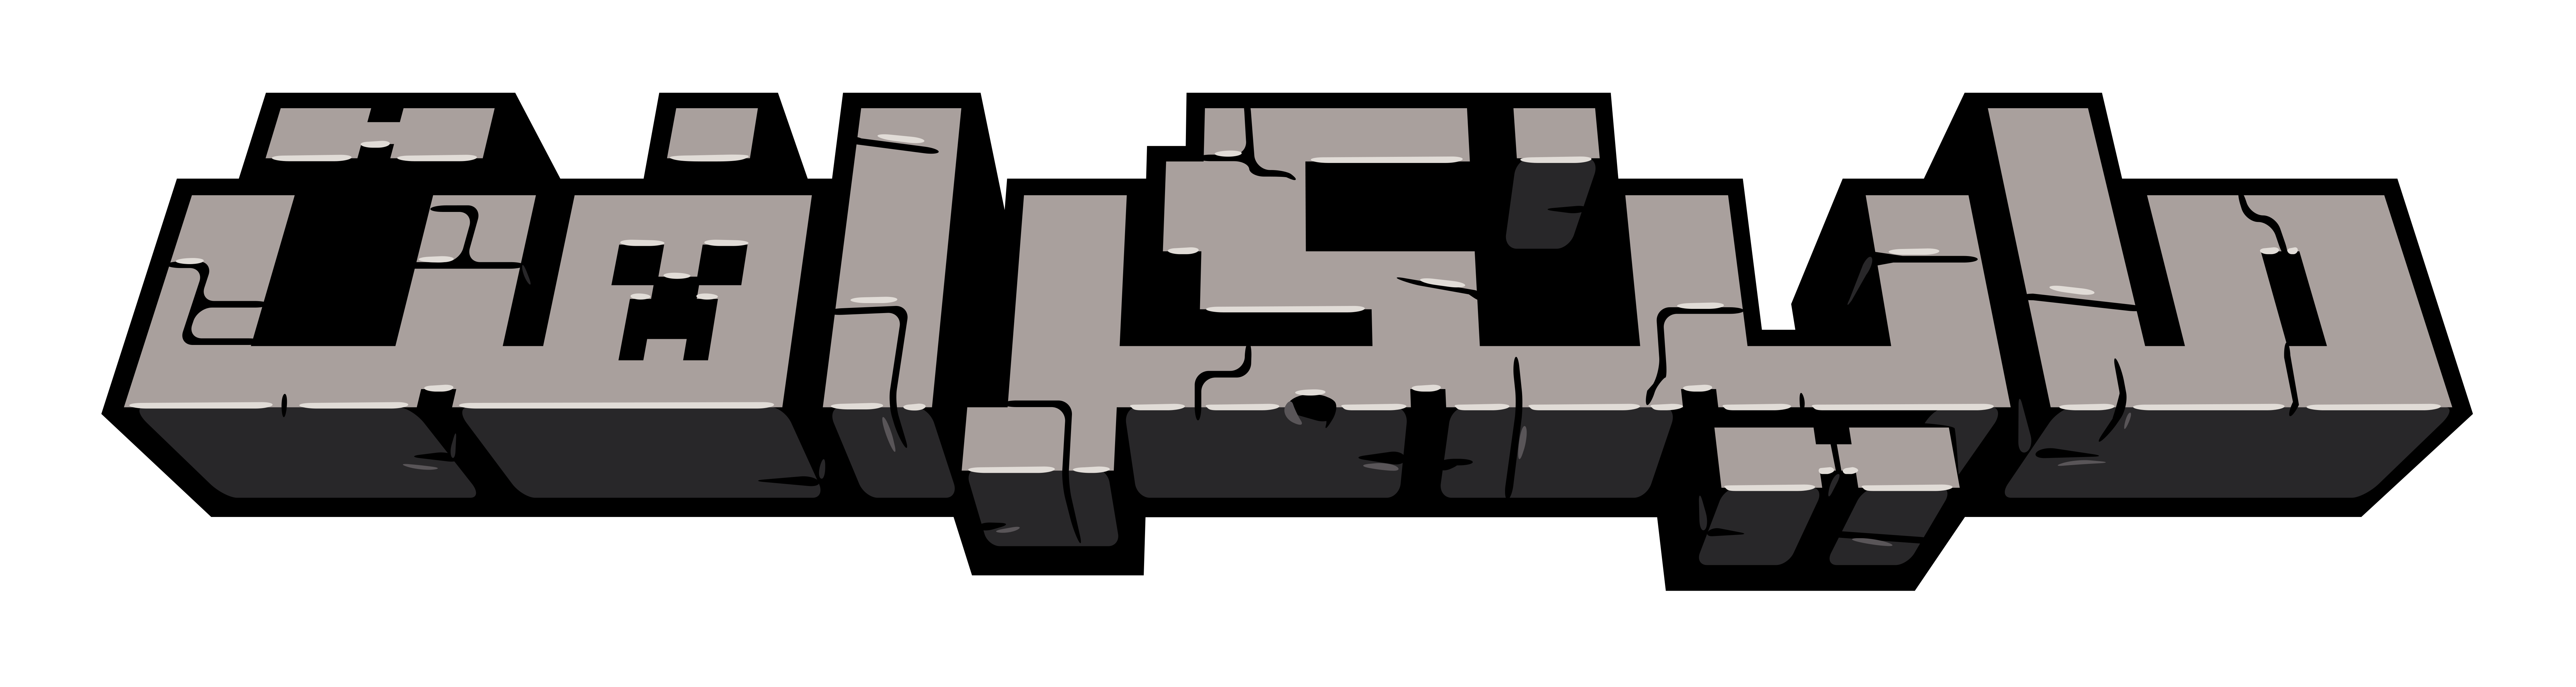 Minecraft logo png. Майнкрафт логотип. Первый логотип МАЙНКРАФТА. Майнкрафт на прозрачном фоне. Майнкрафт логотип обновления.